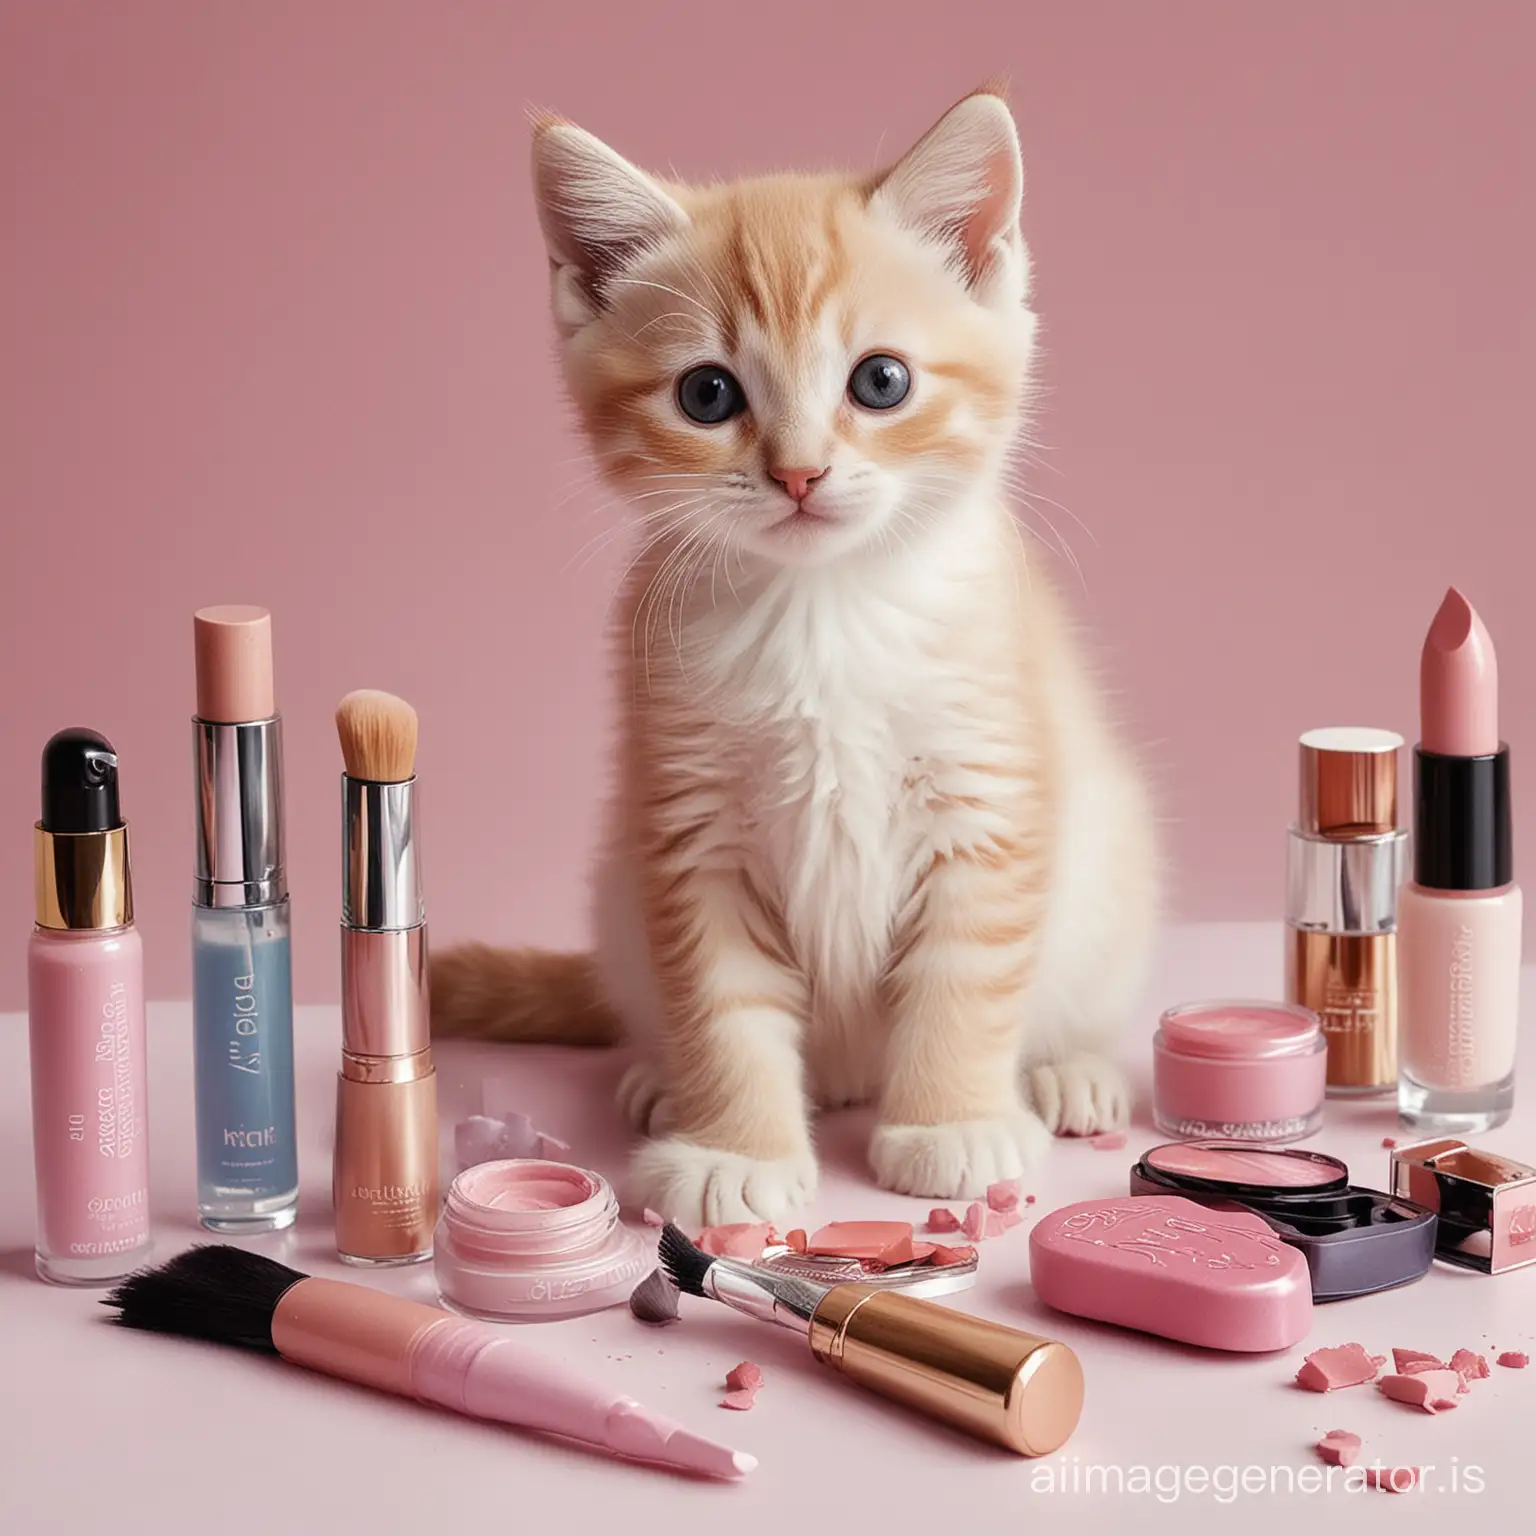 Kitten and cosmetics